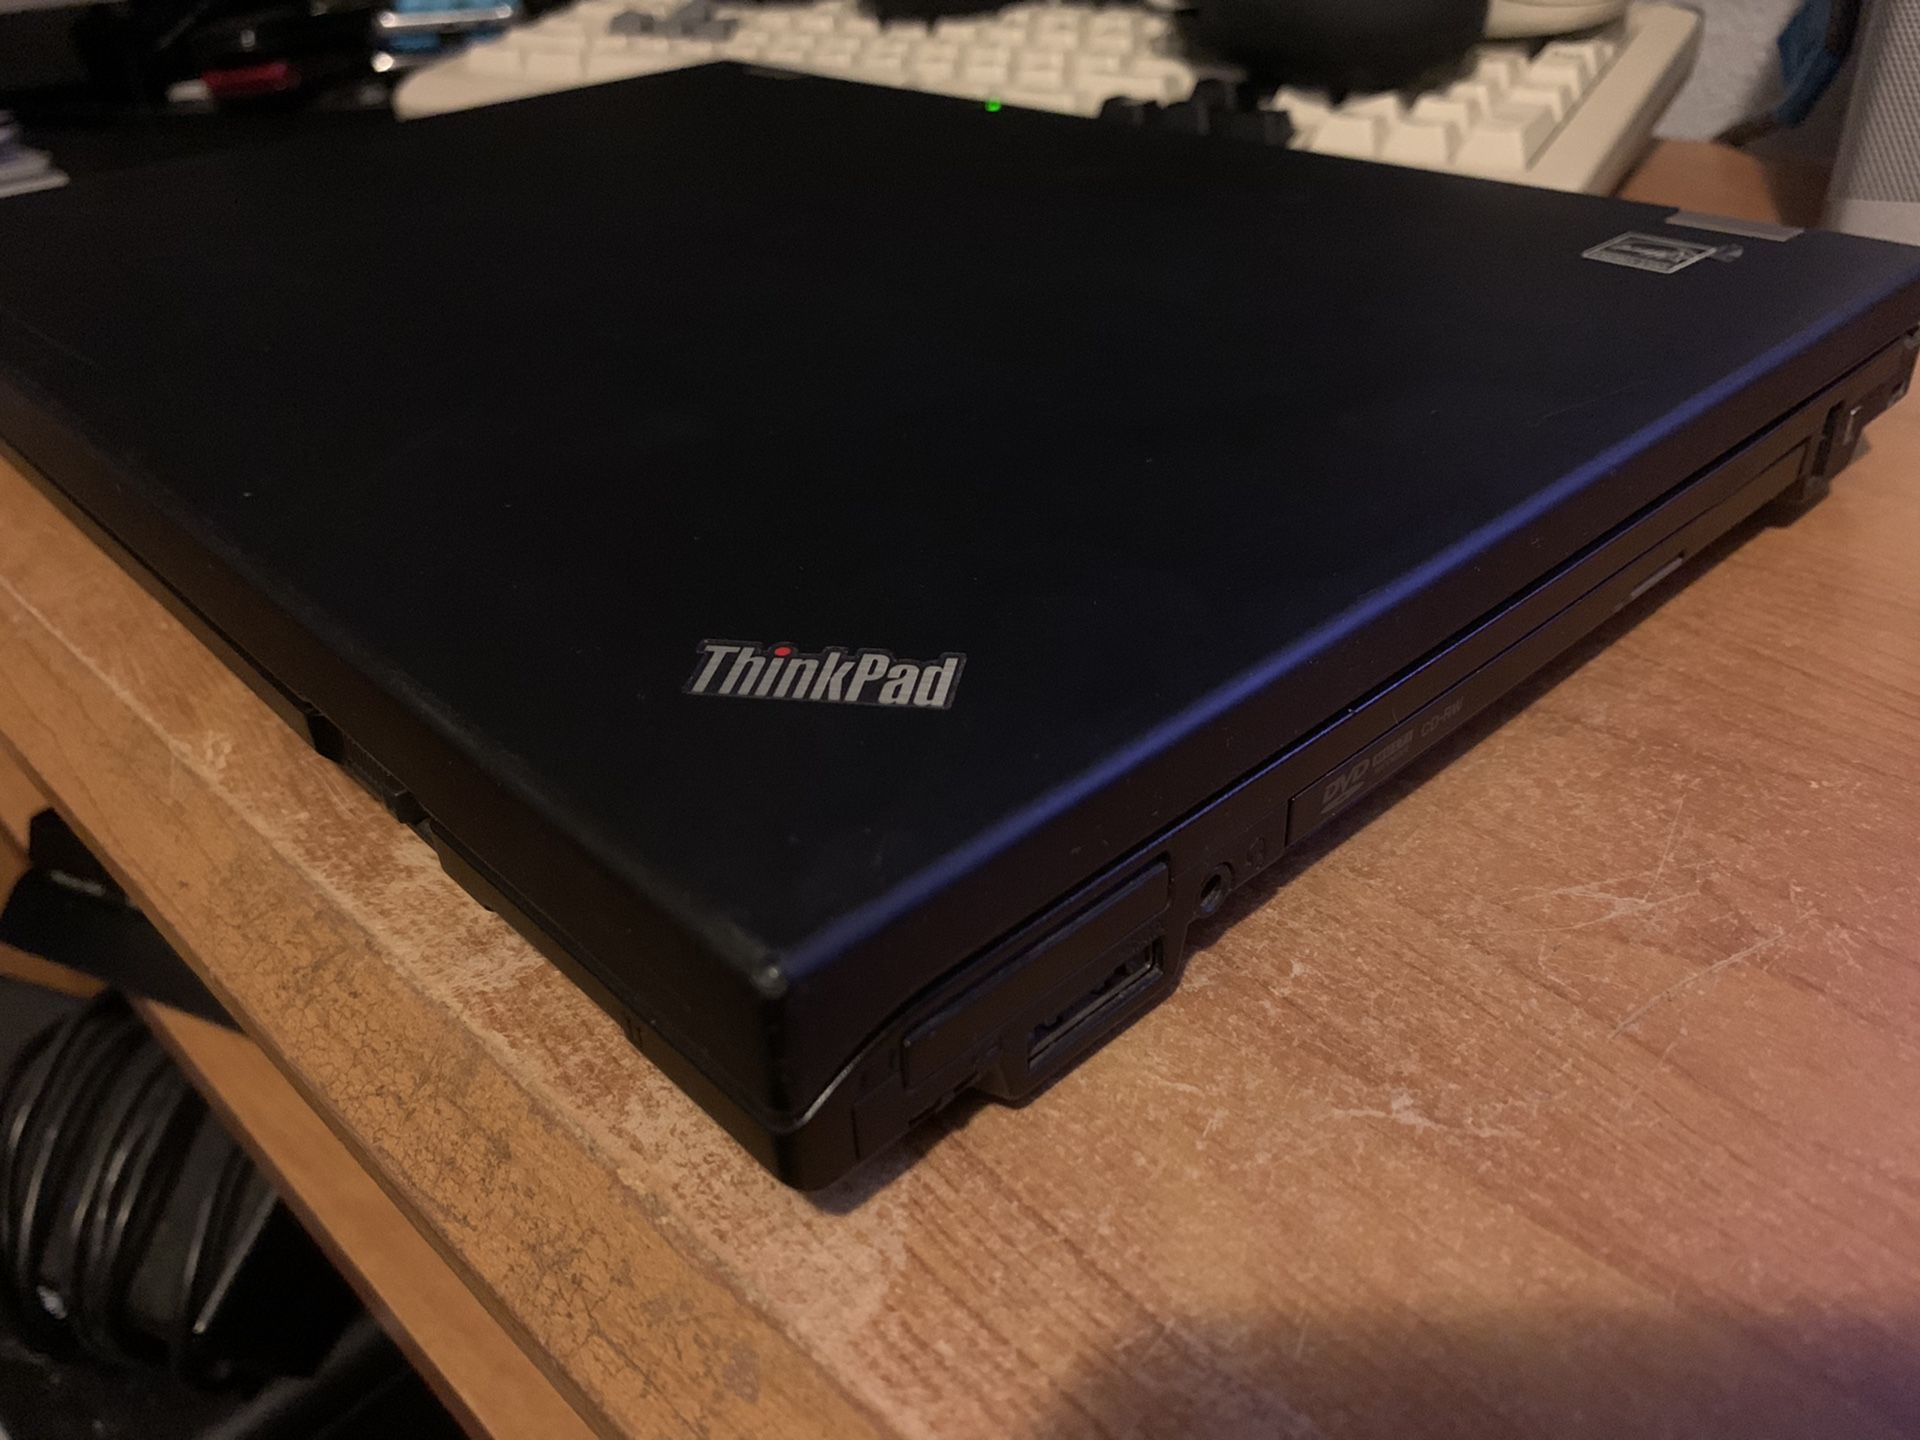 IBM ThinkPad T410 intel i5 Processor